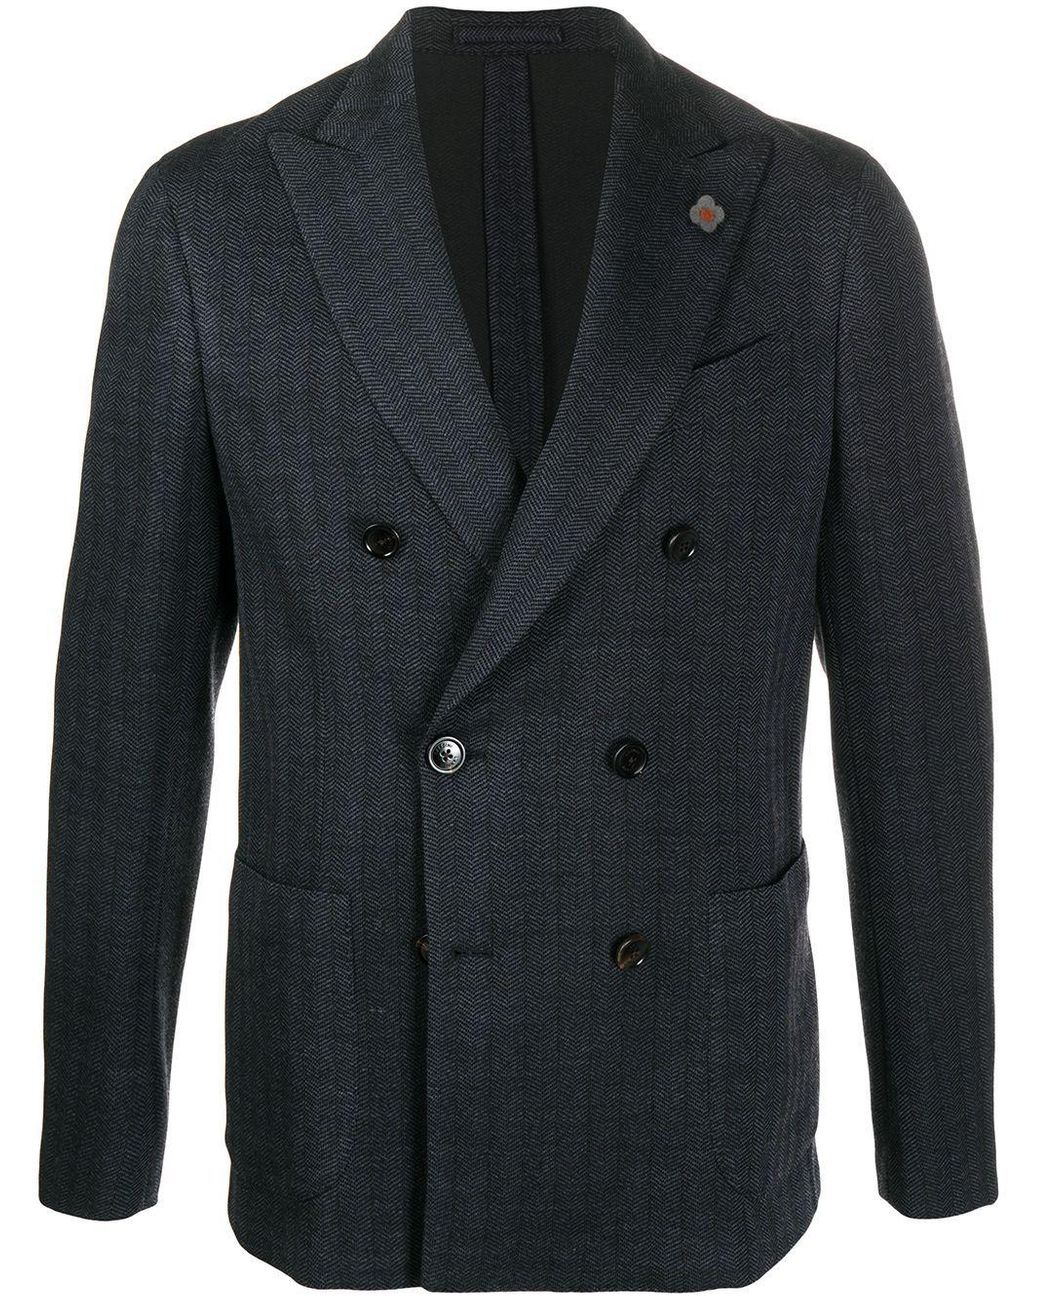 Lardini Wool Chevron Double-breasted Suit in Blue for Men - Lyst